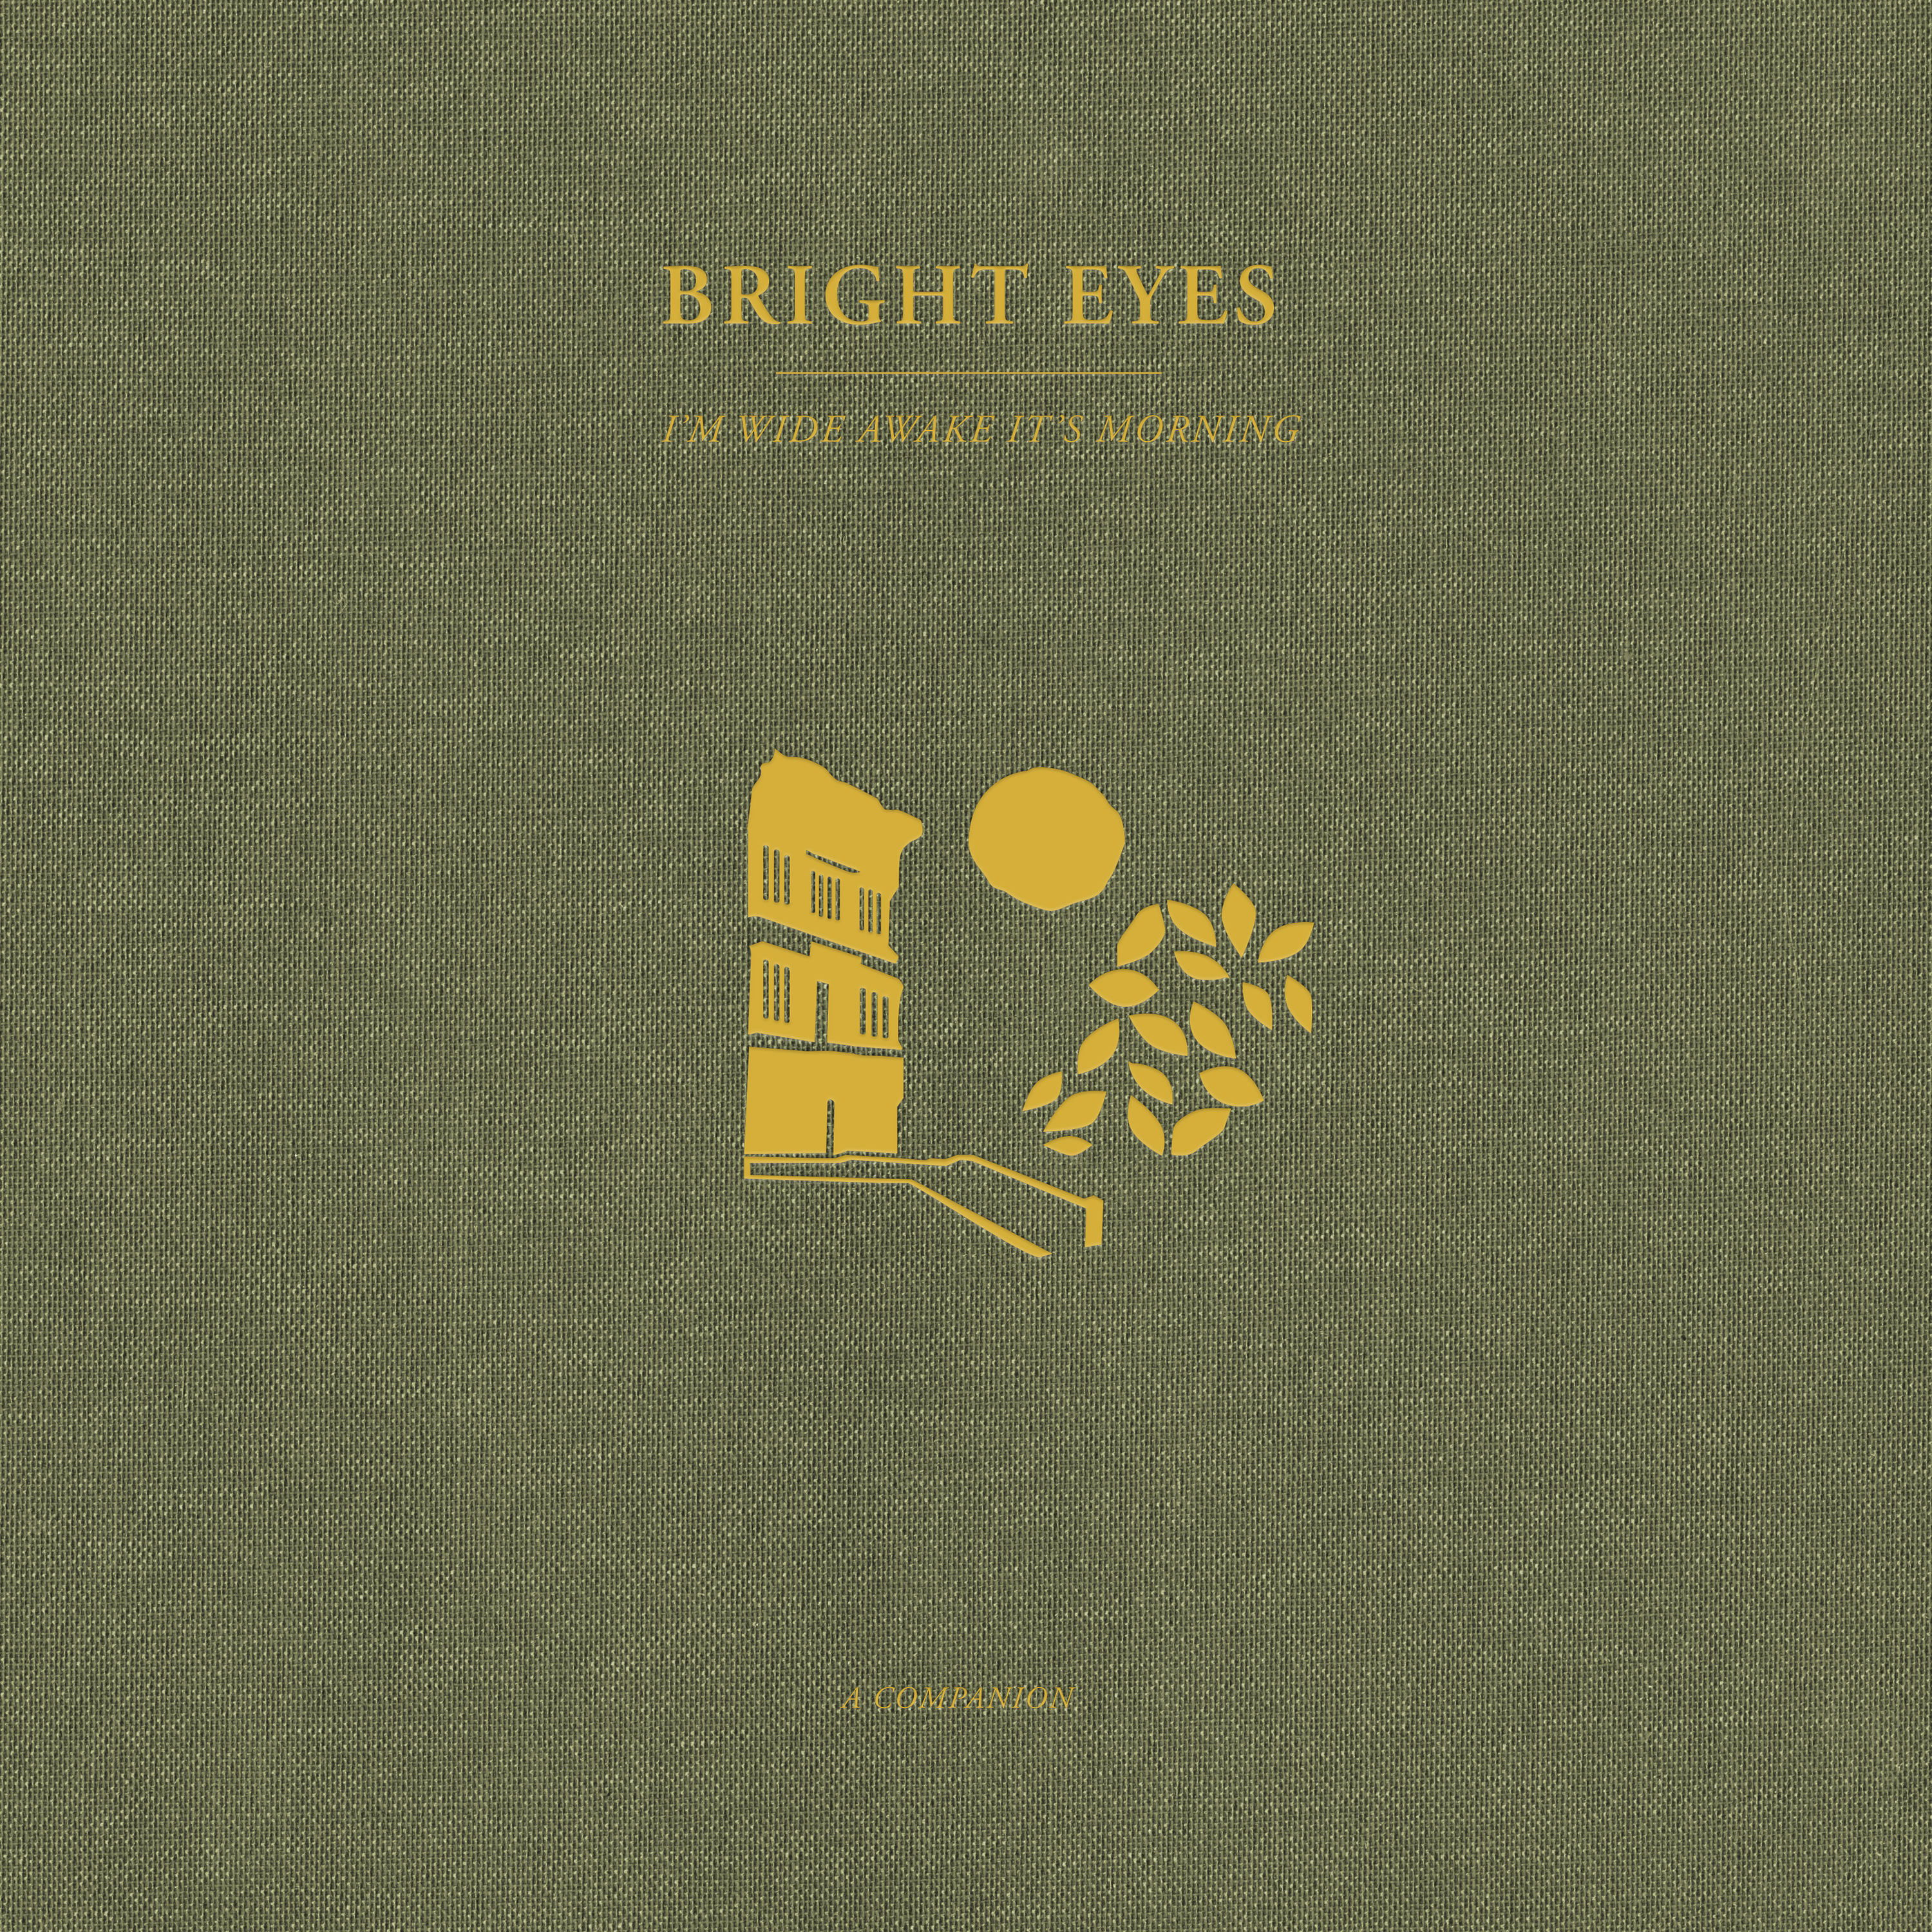 Bright Eyes - I'm Wide Awake, It's Morning: A Com